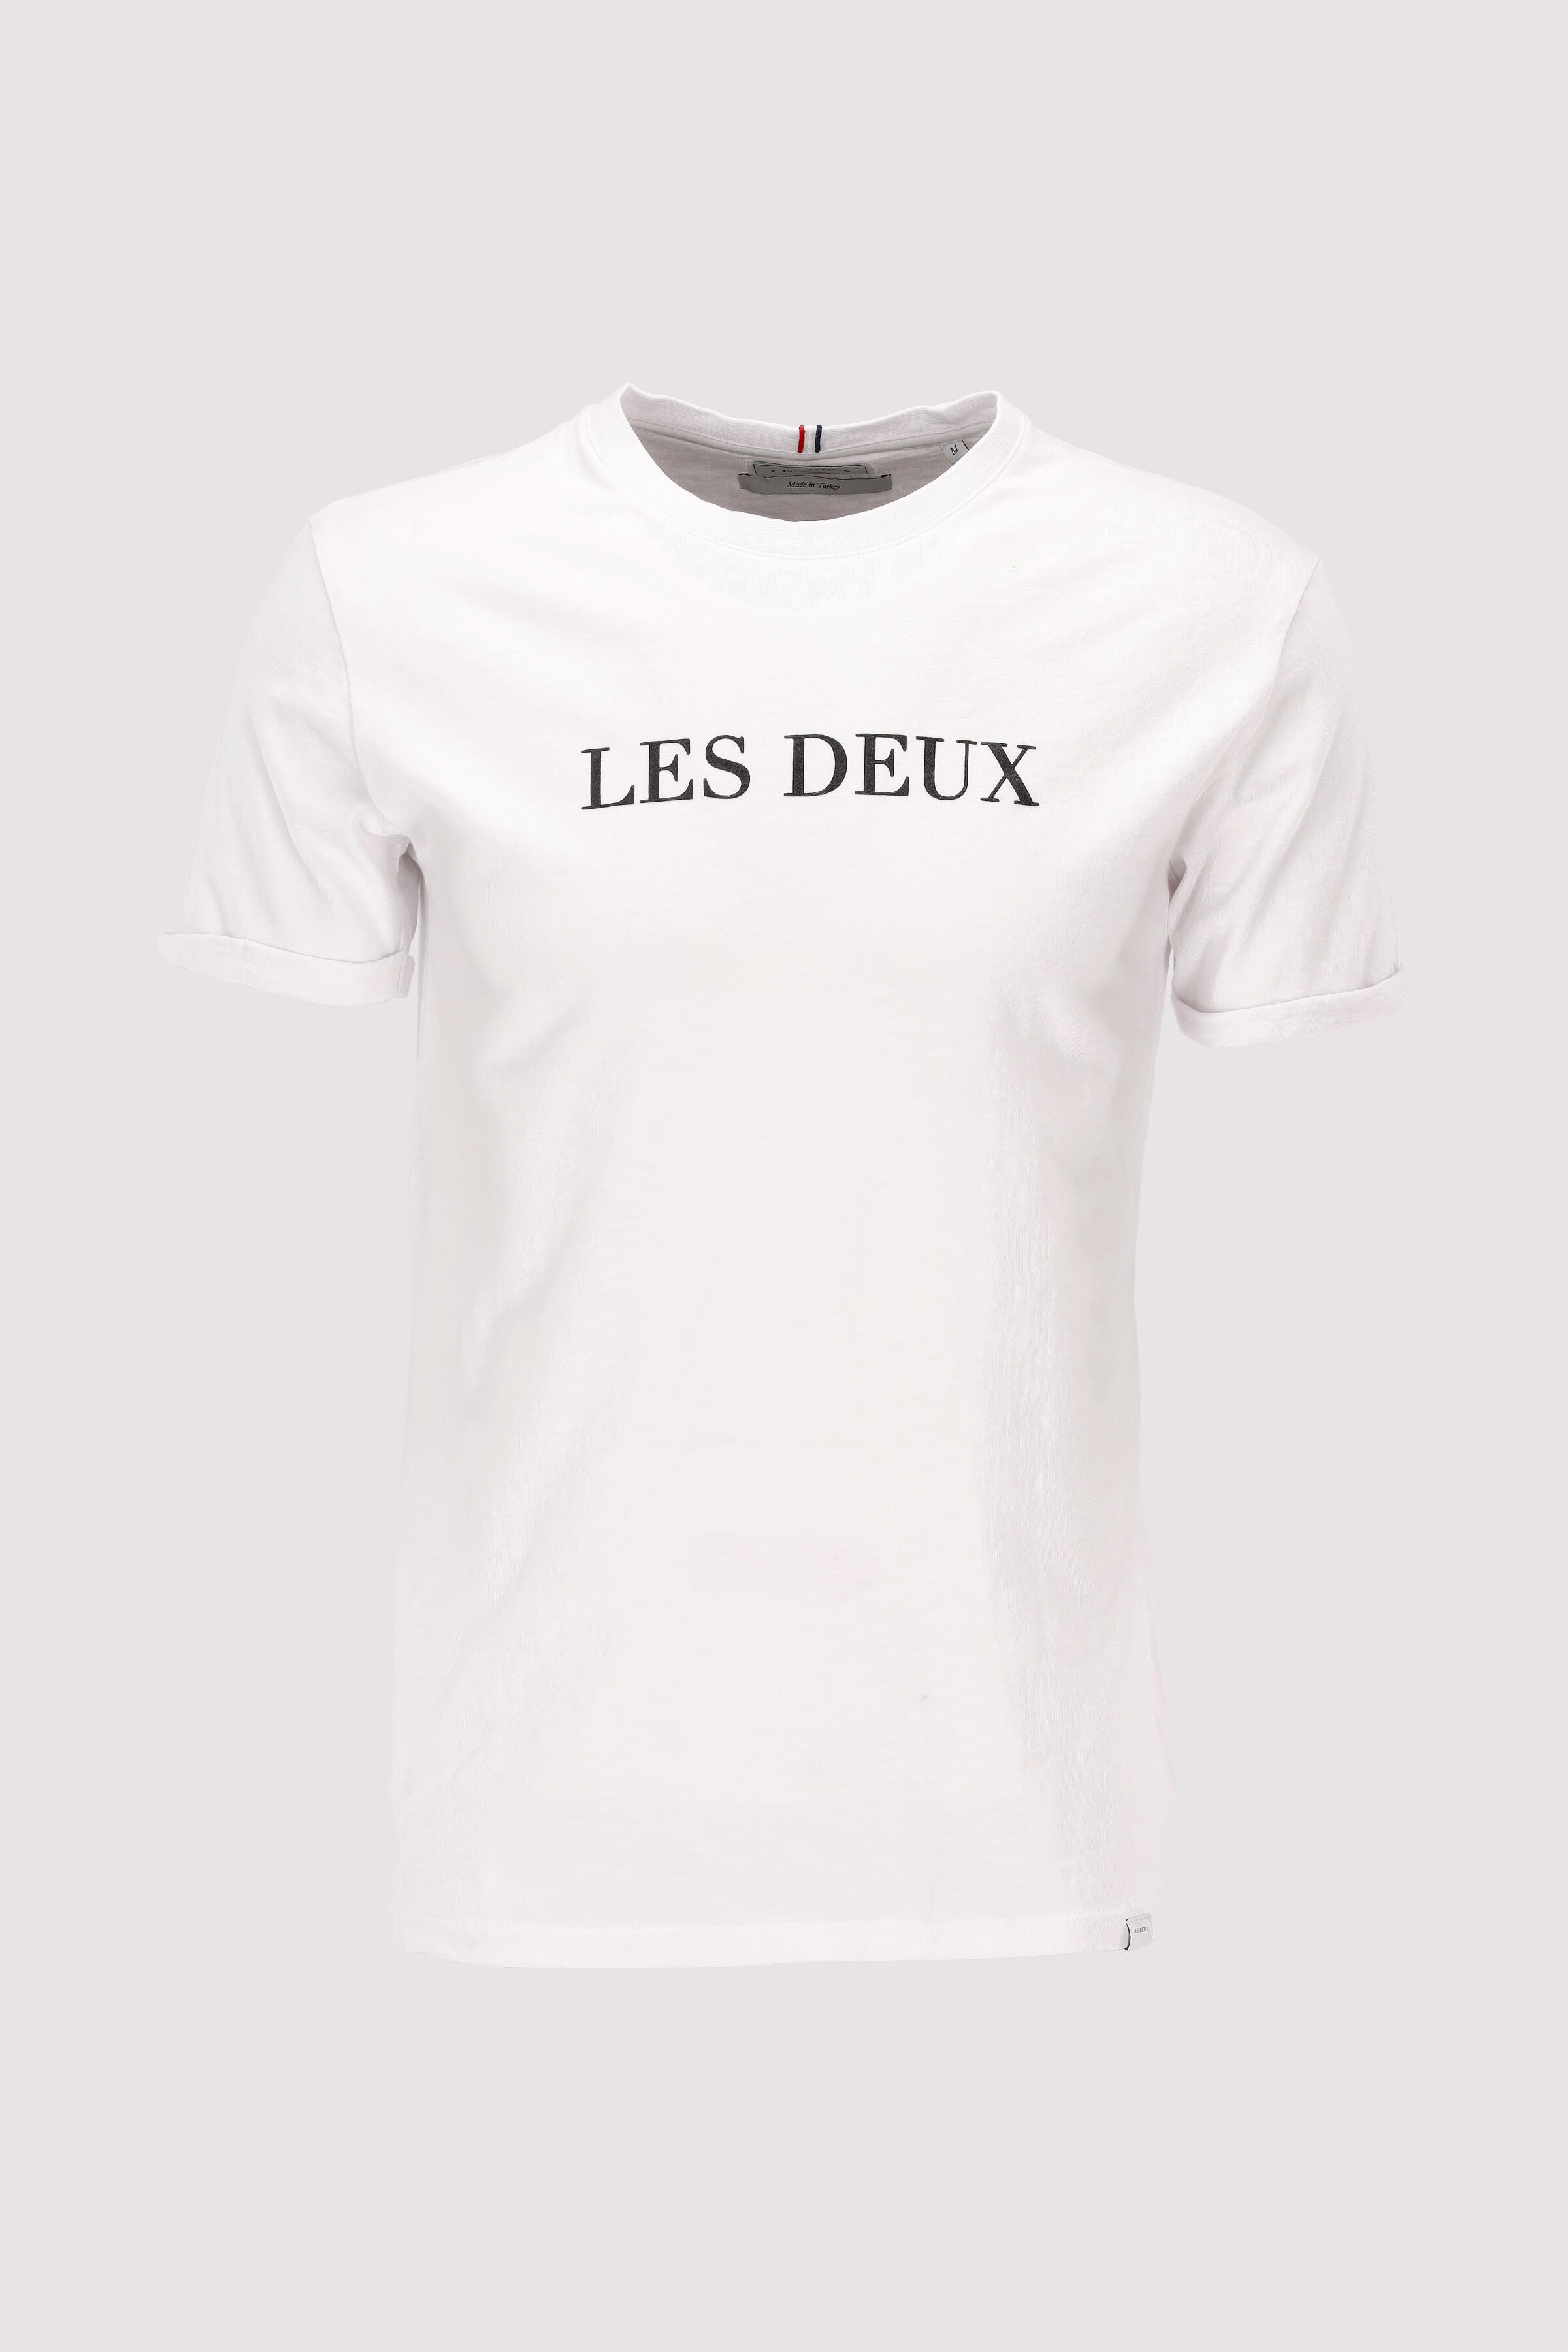 LesDeux T-Shirt